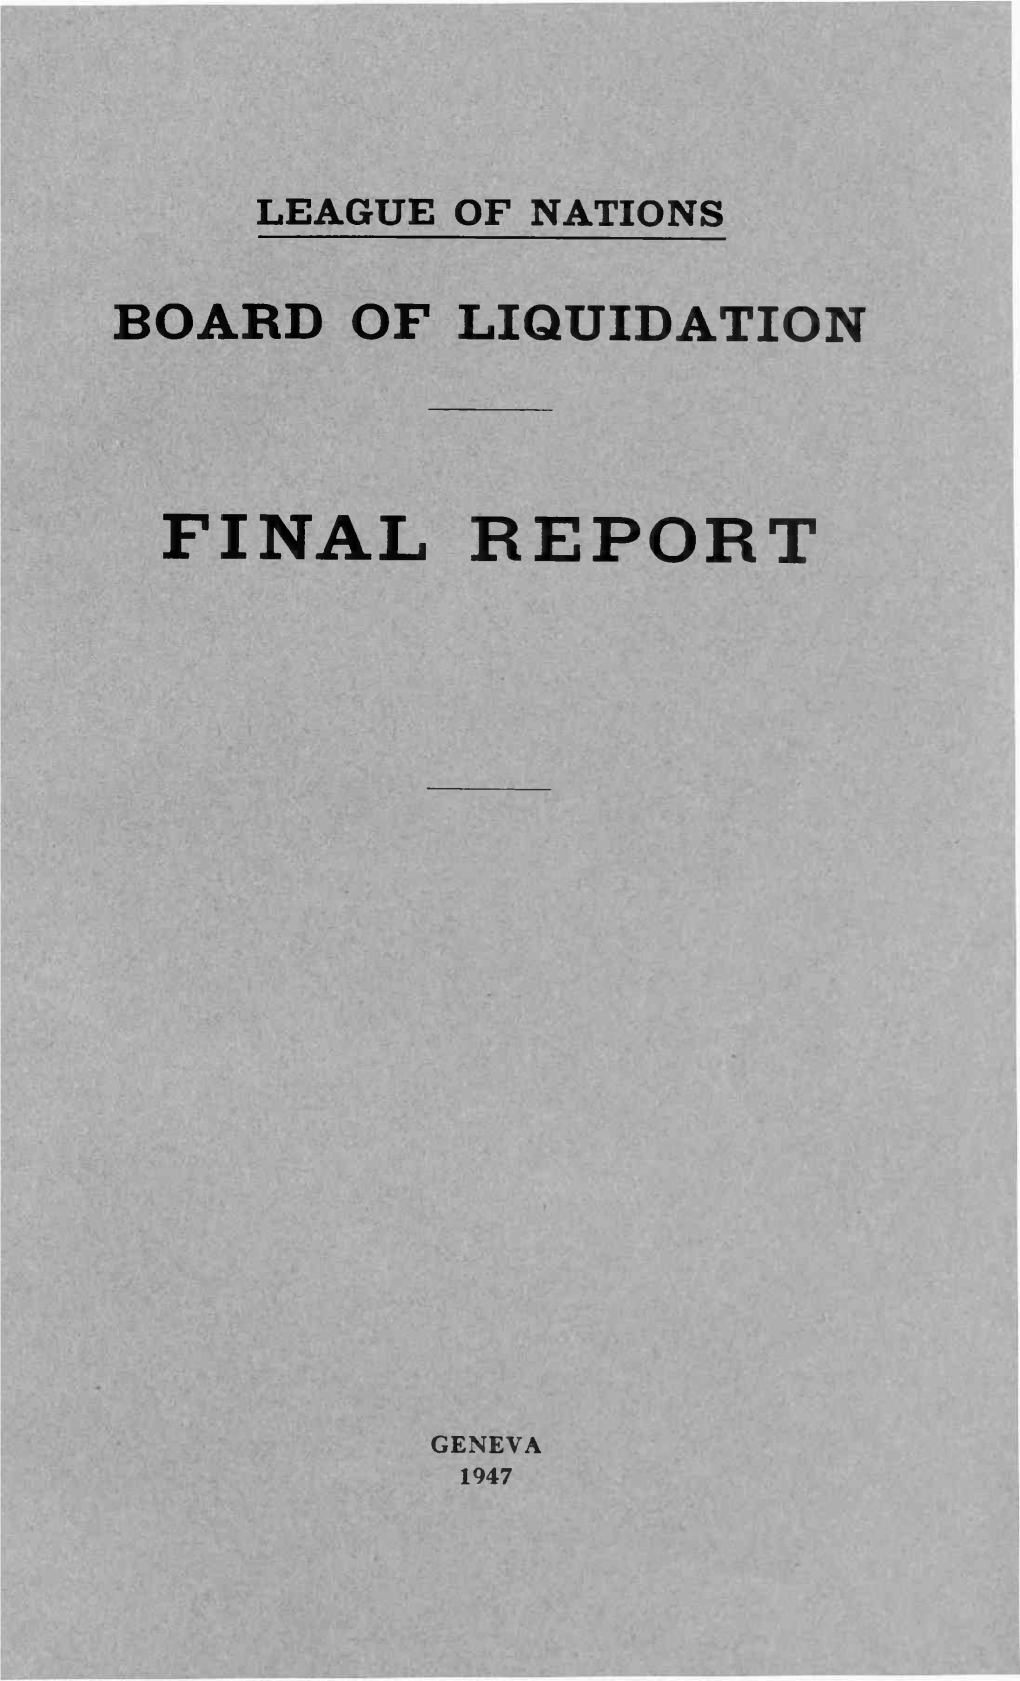 Board of Liquidation Final Report